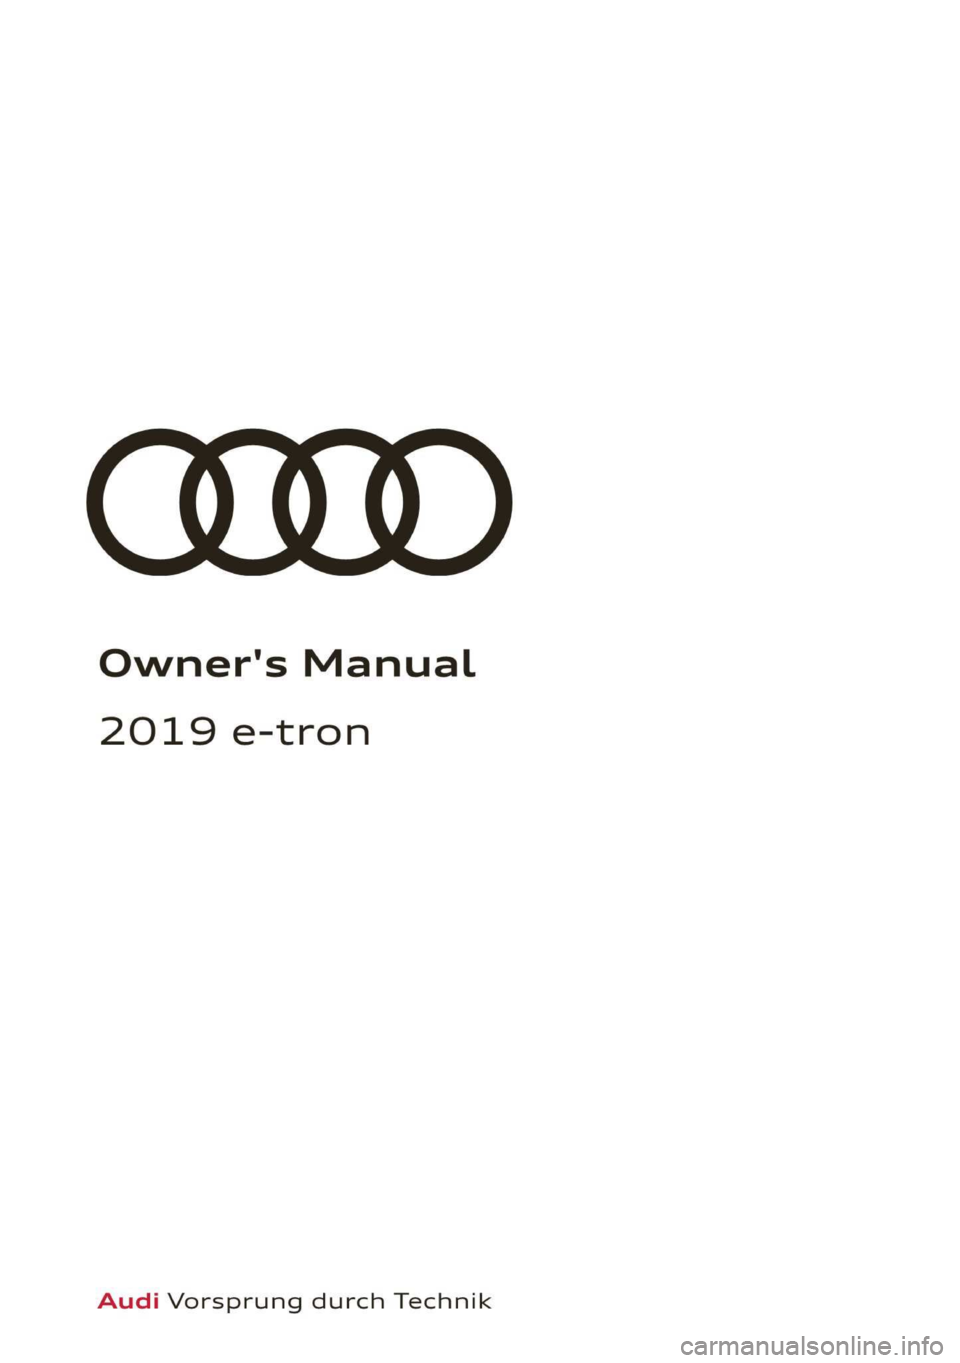 AUDI E-TRON 2019  Owners Manual Owner's Manual 
2019 e-tron 
Audi Vorsprung durch Technik  